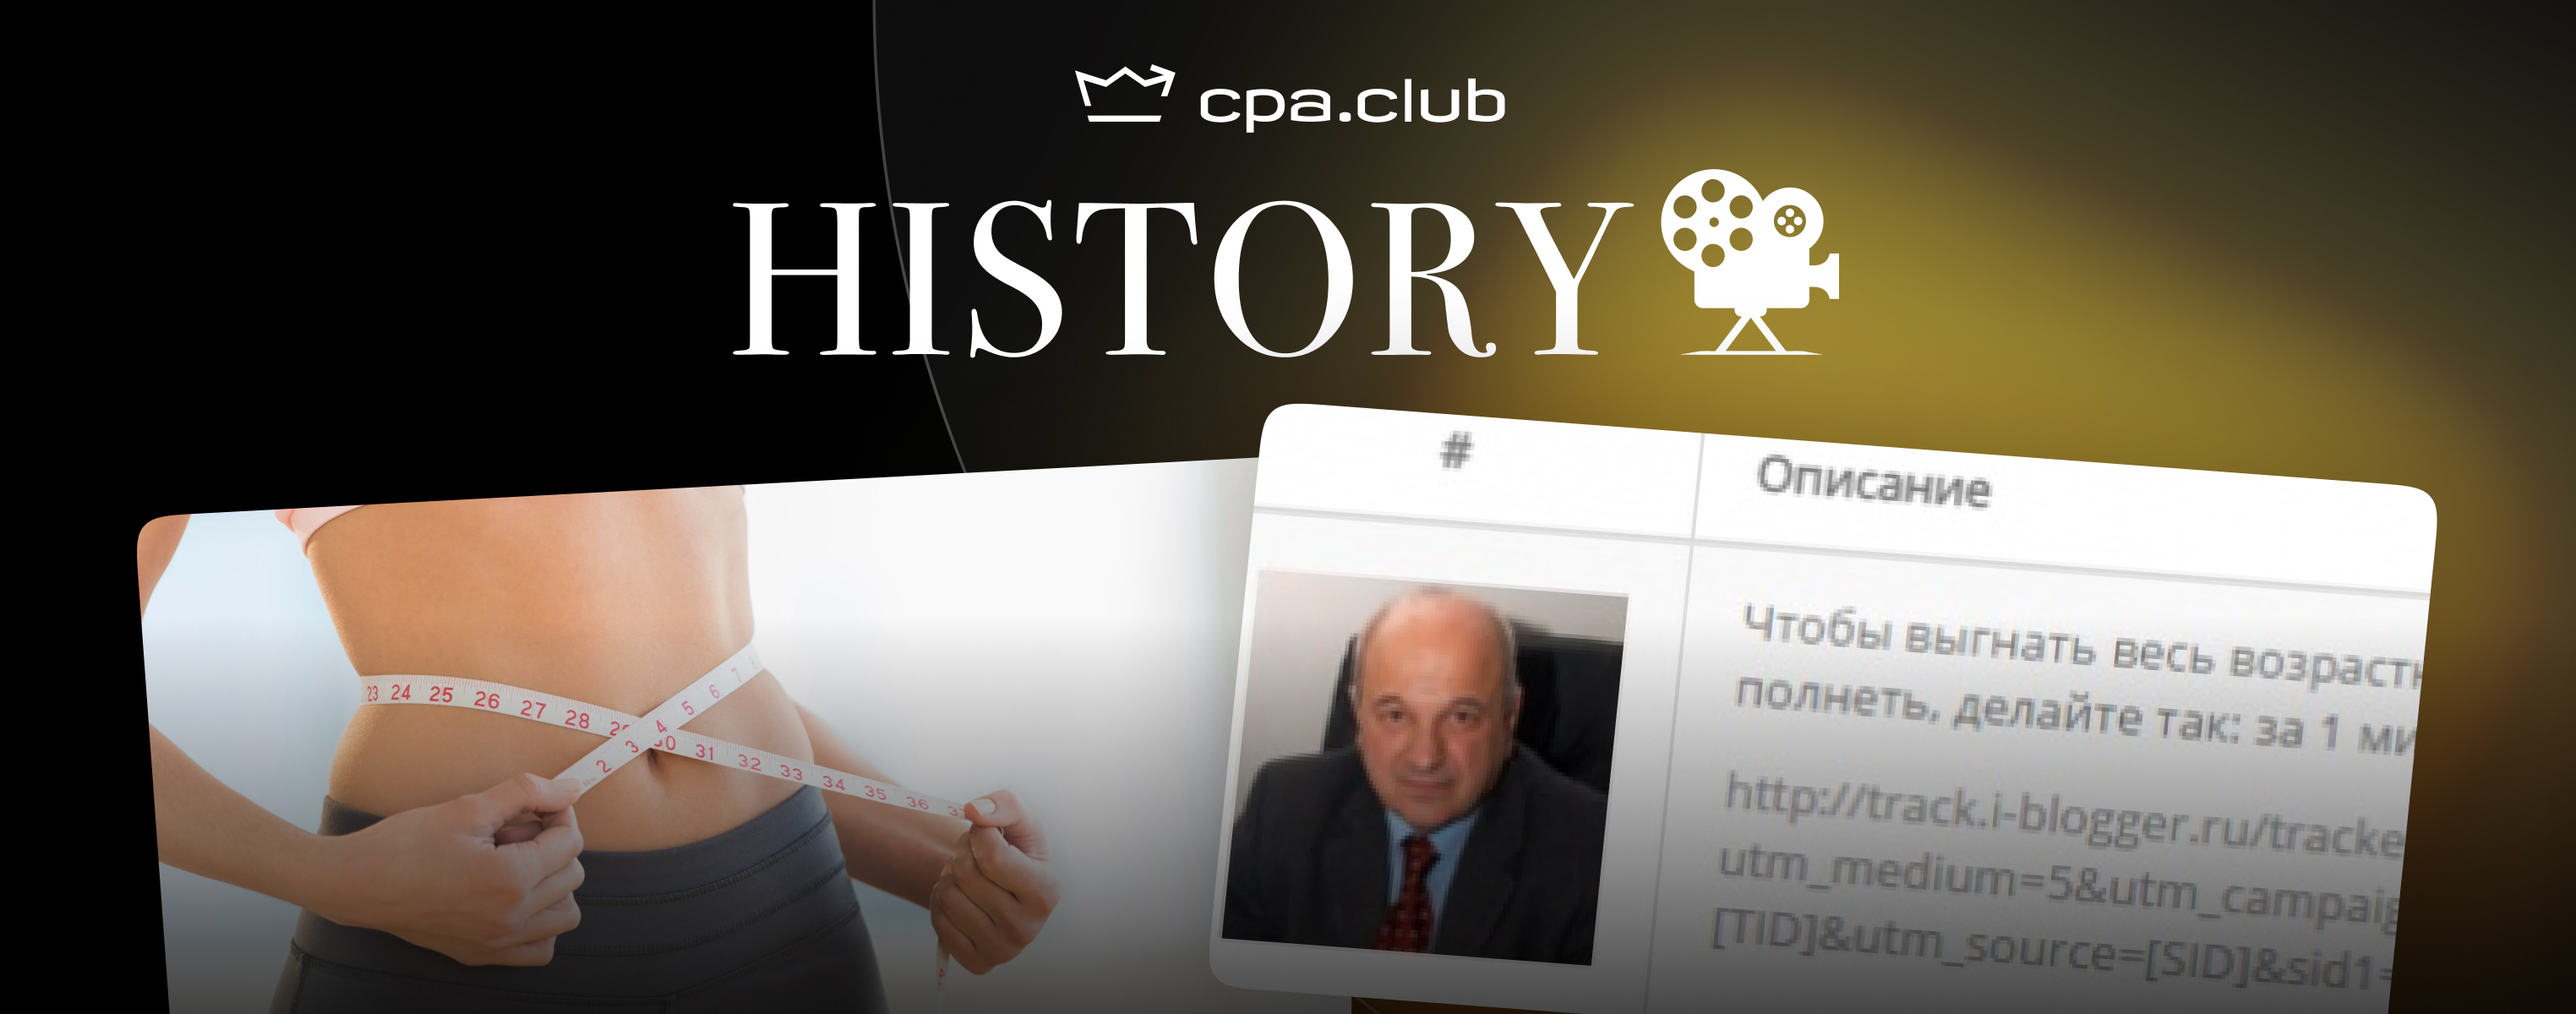 CPA.Club History. Ретро-обзор. Похудалки принесли 1.3кк.